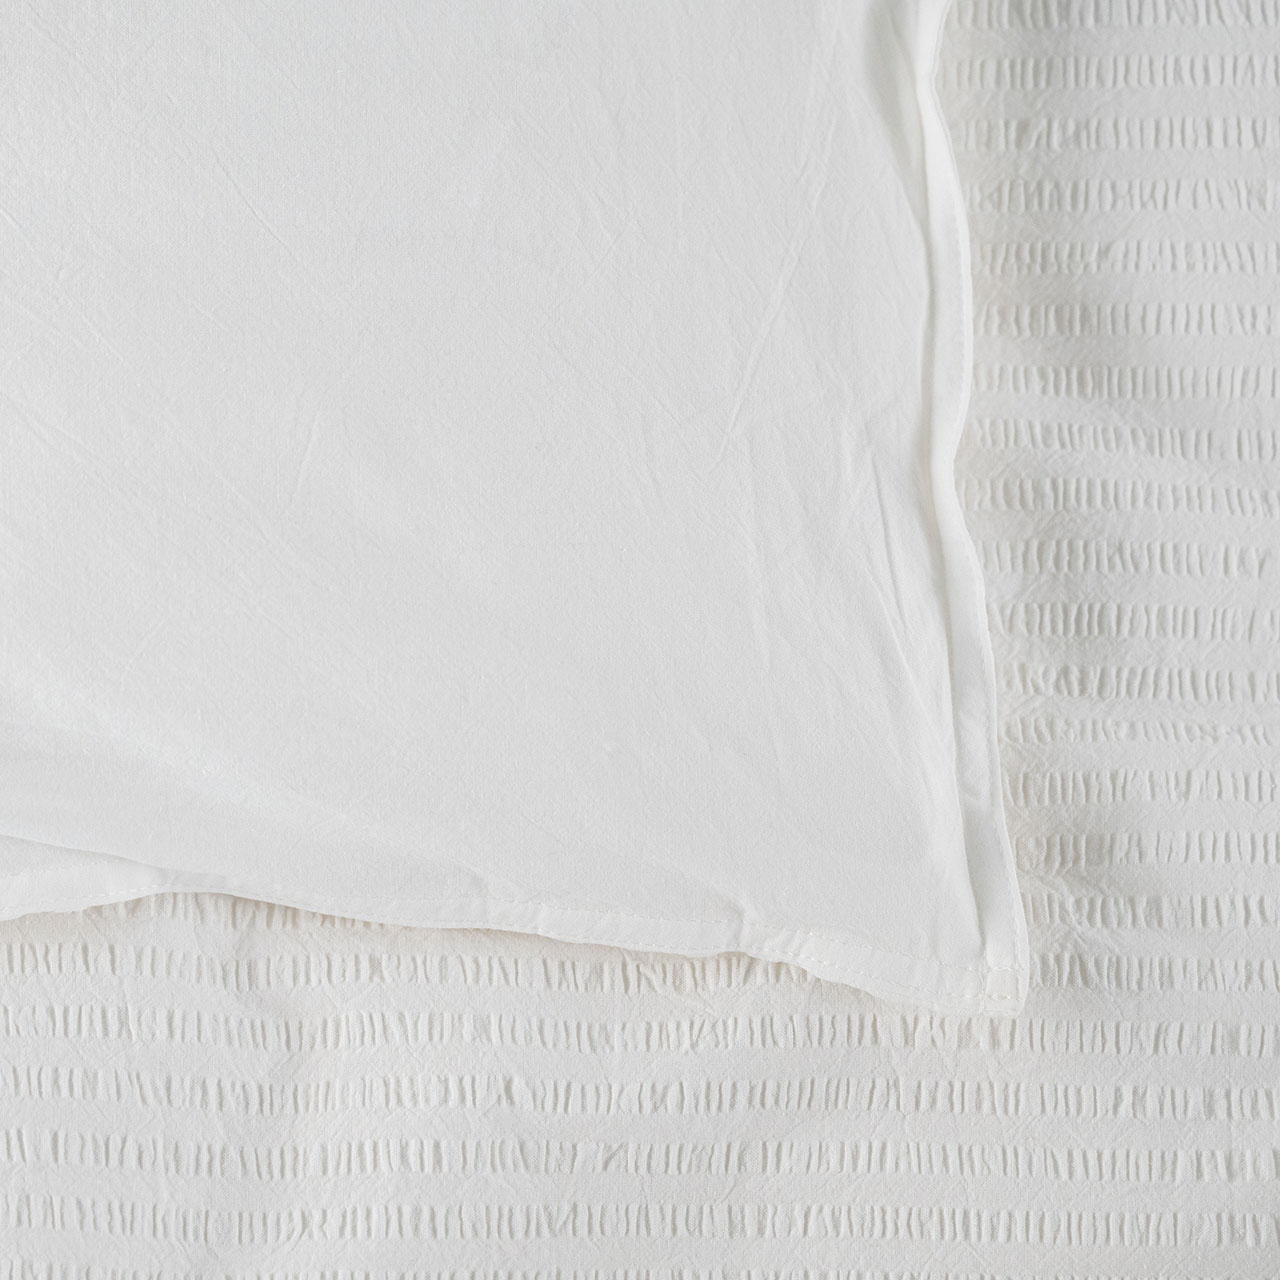 Cotton Seersucker White European Pillowcase Pair - Modella